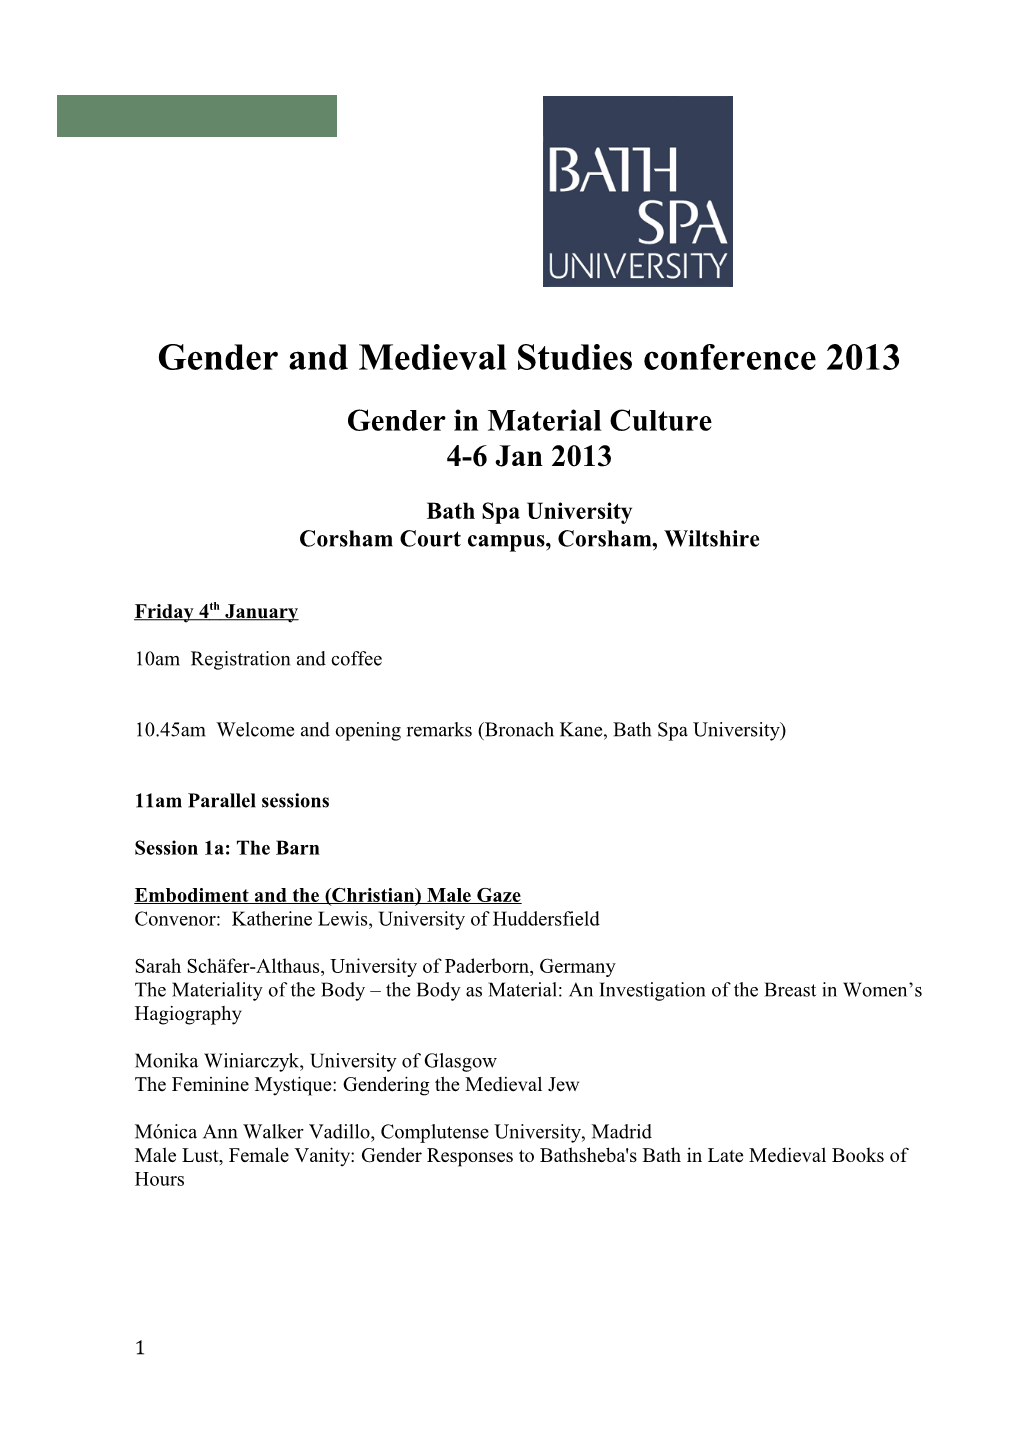 Gender and Medieval Studies Conference 2013